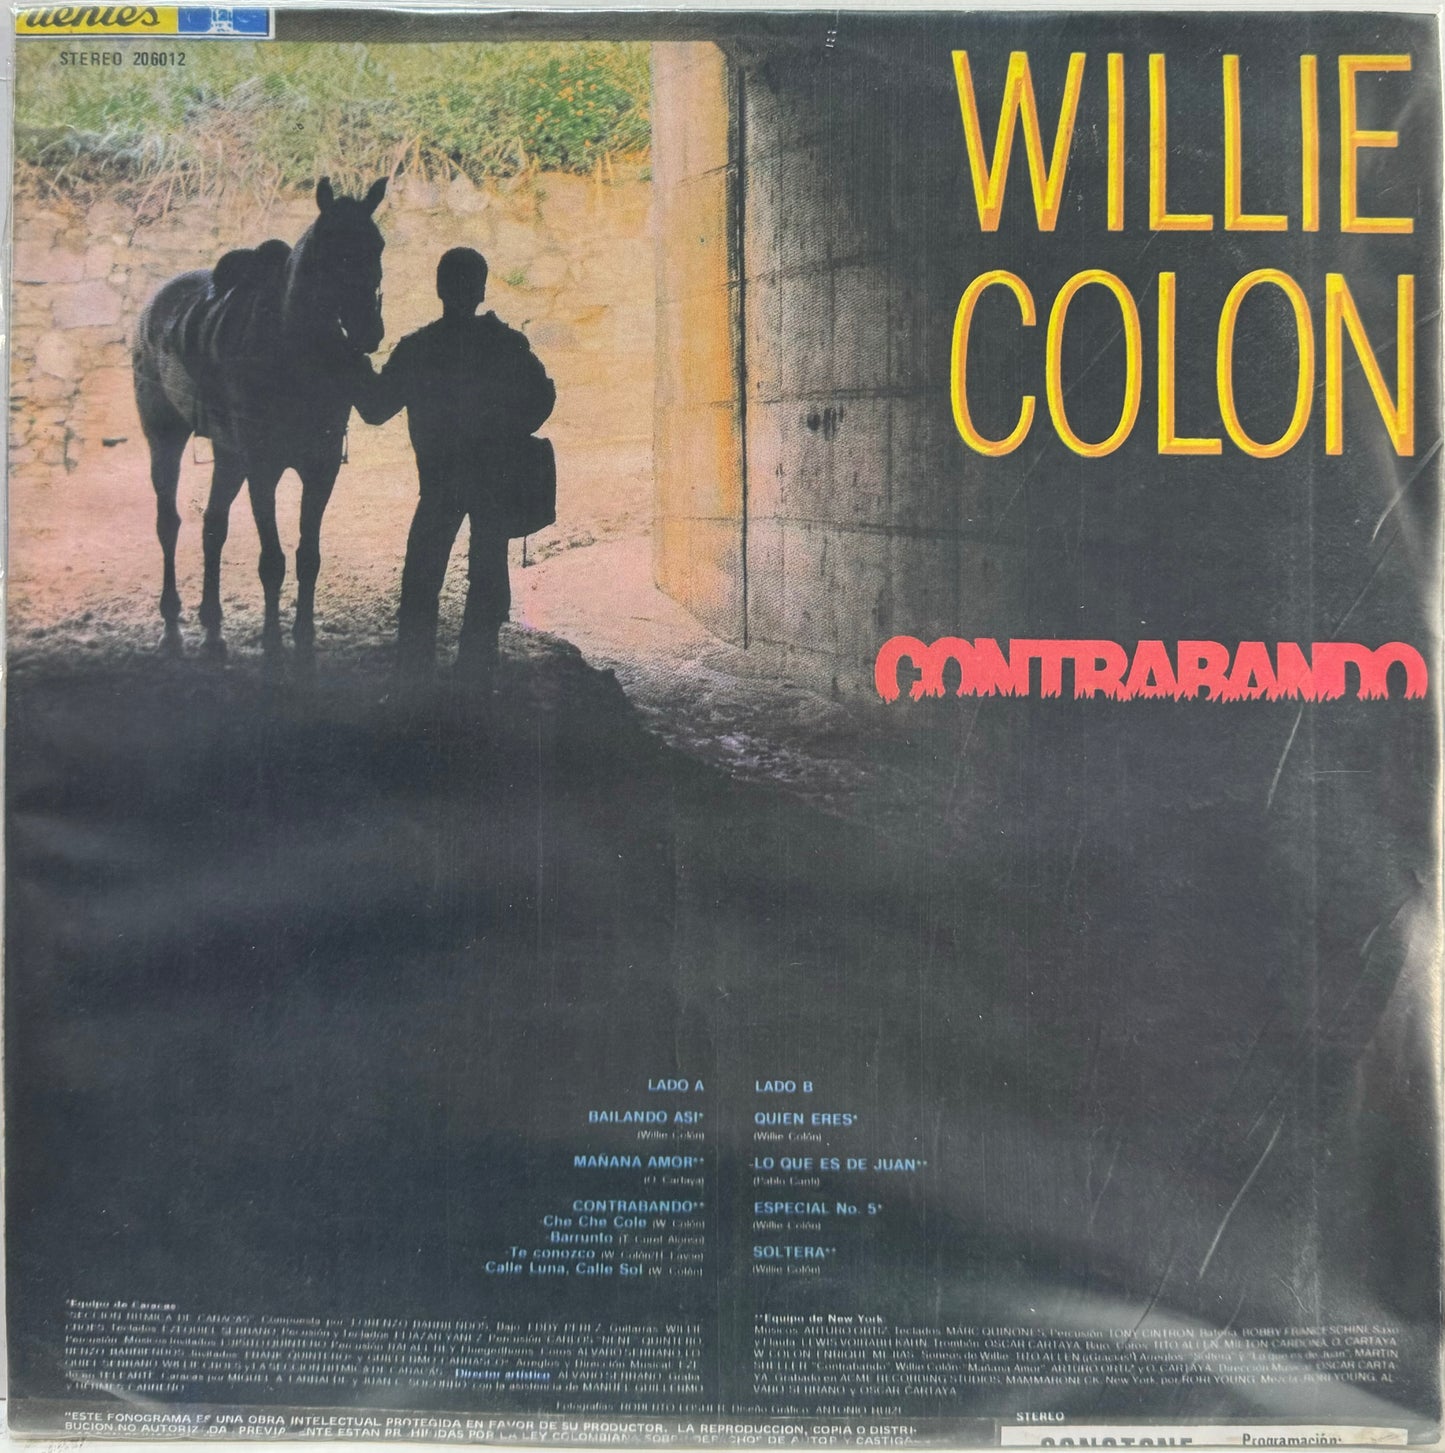 WILLIE COLON - CONTRABANDO LP